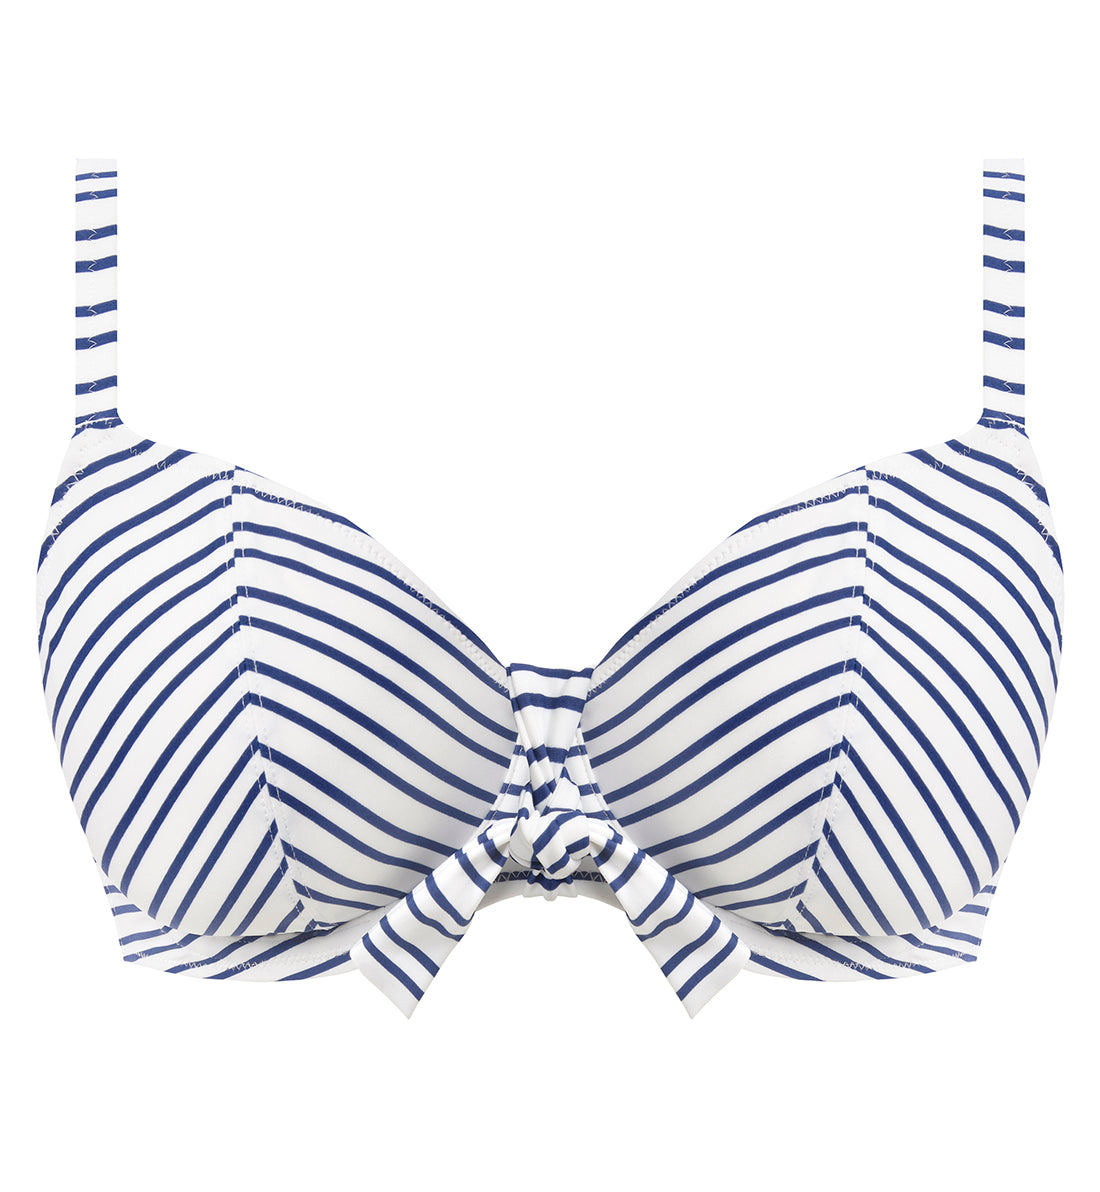 Freya New Shores Underwire Plunge Bikini Top (202502),28F,Ink - Ink,28F